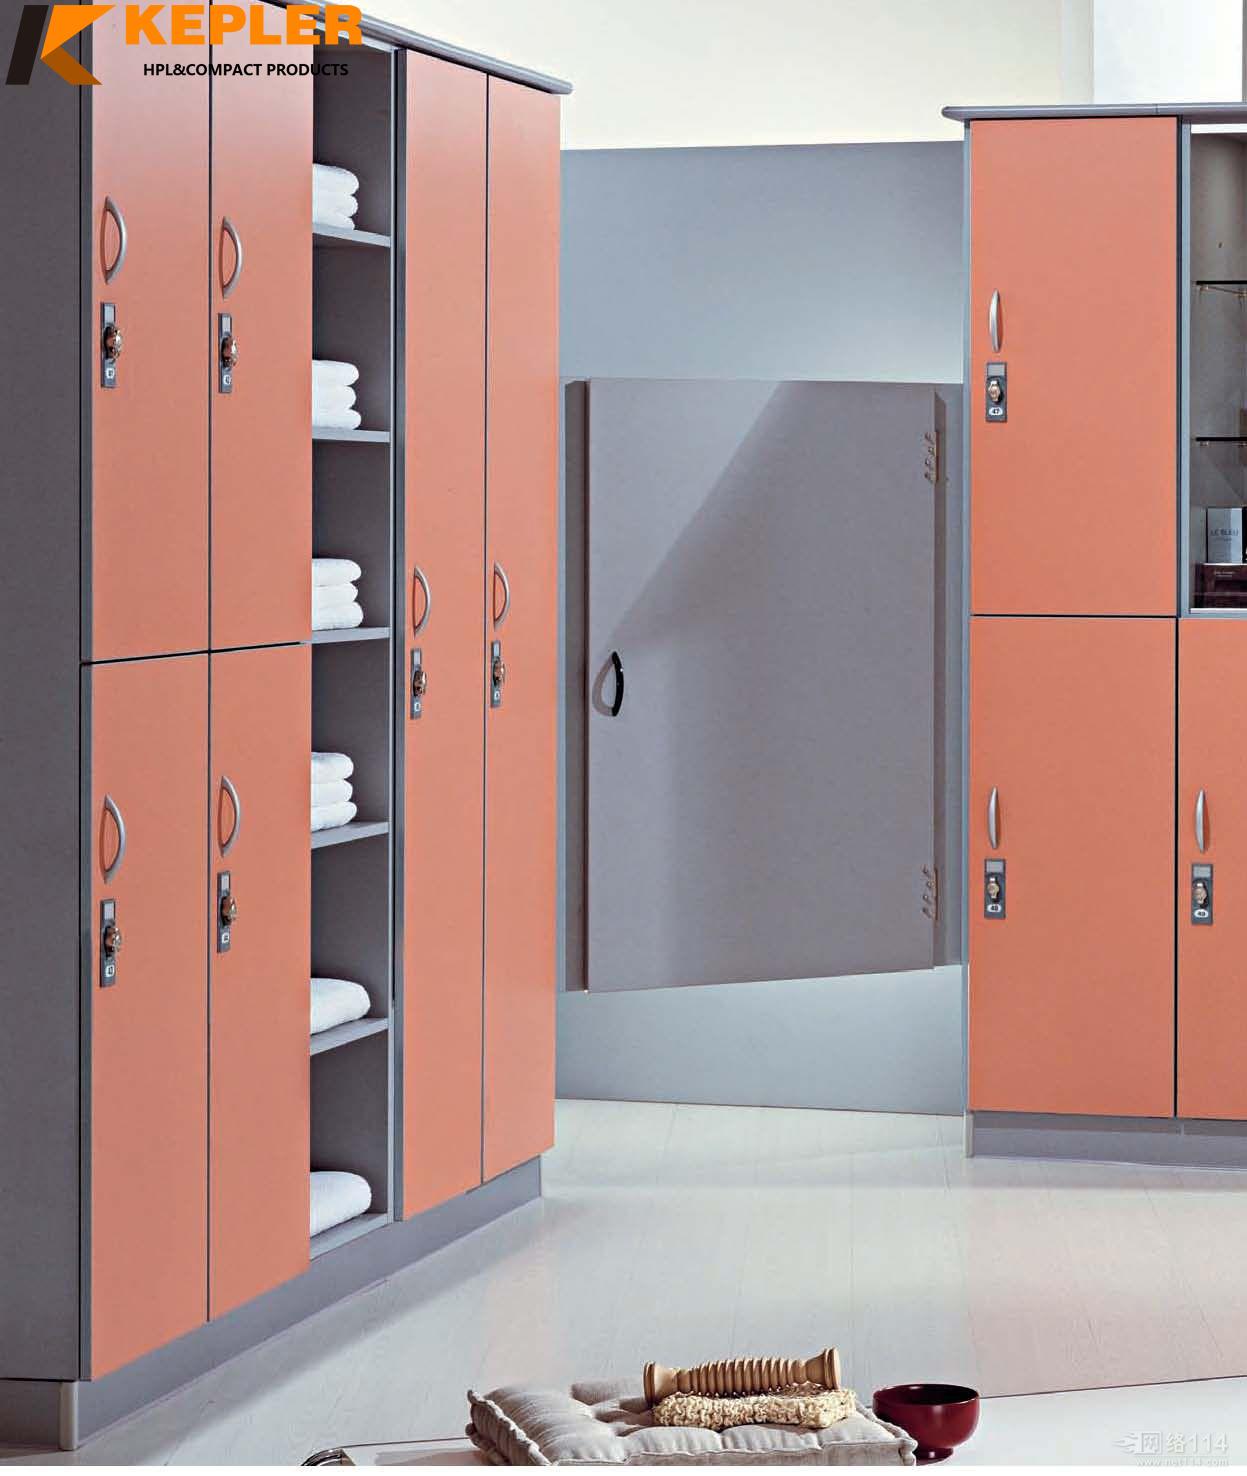 Kepler excellent quality compact laminate hpl office supermarket hospital school locker cabinet supplier